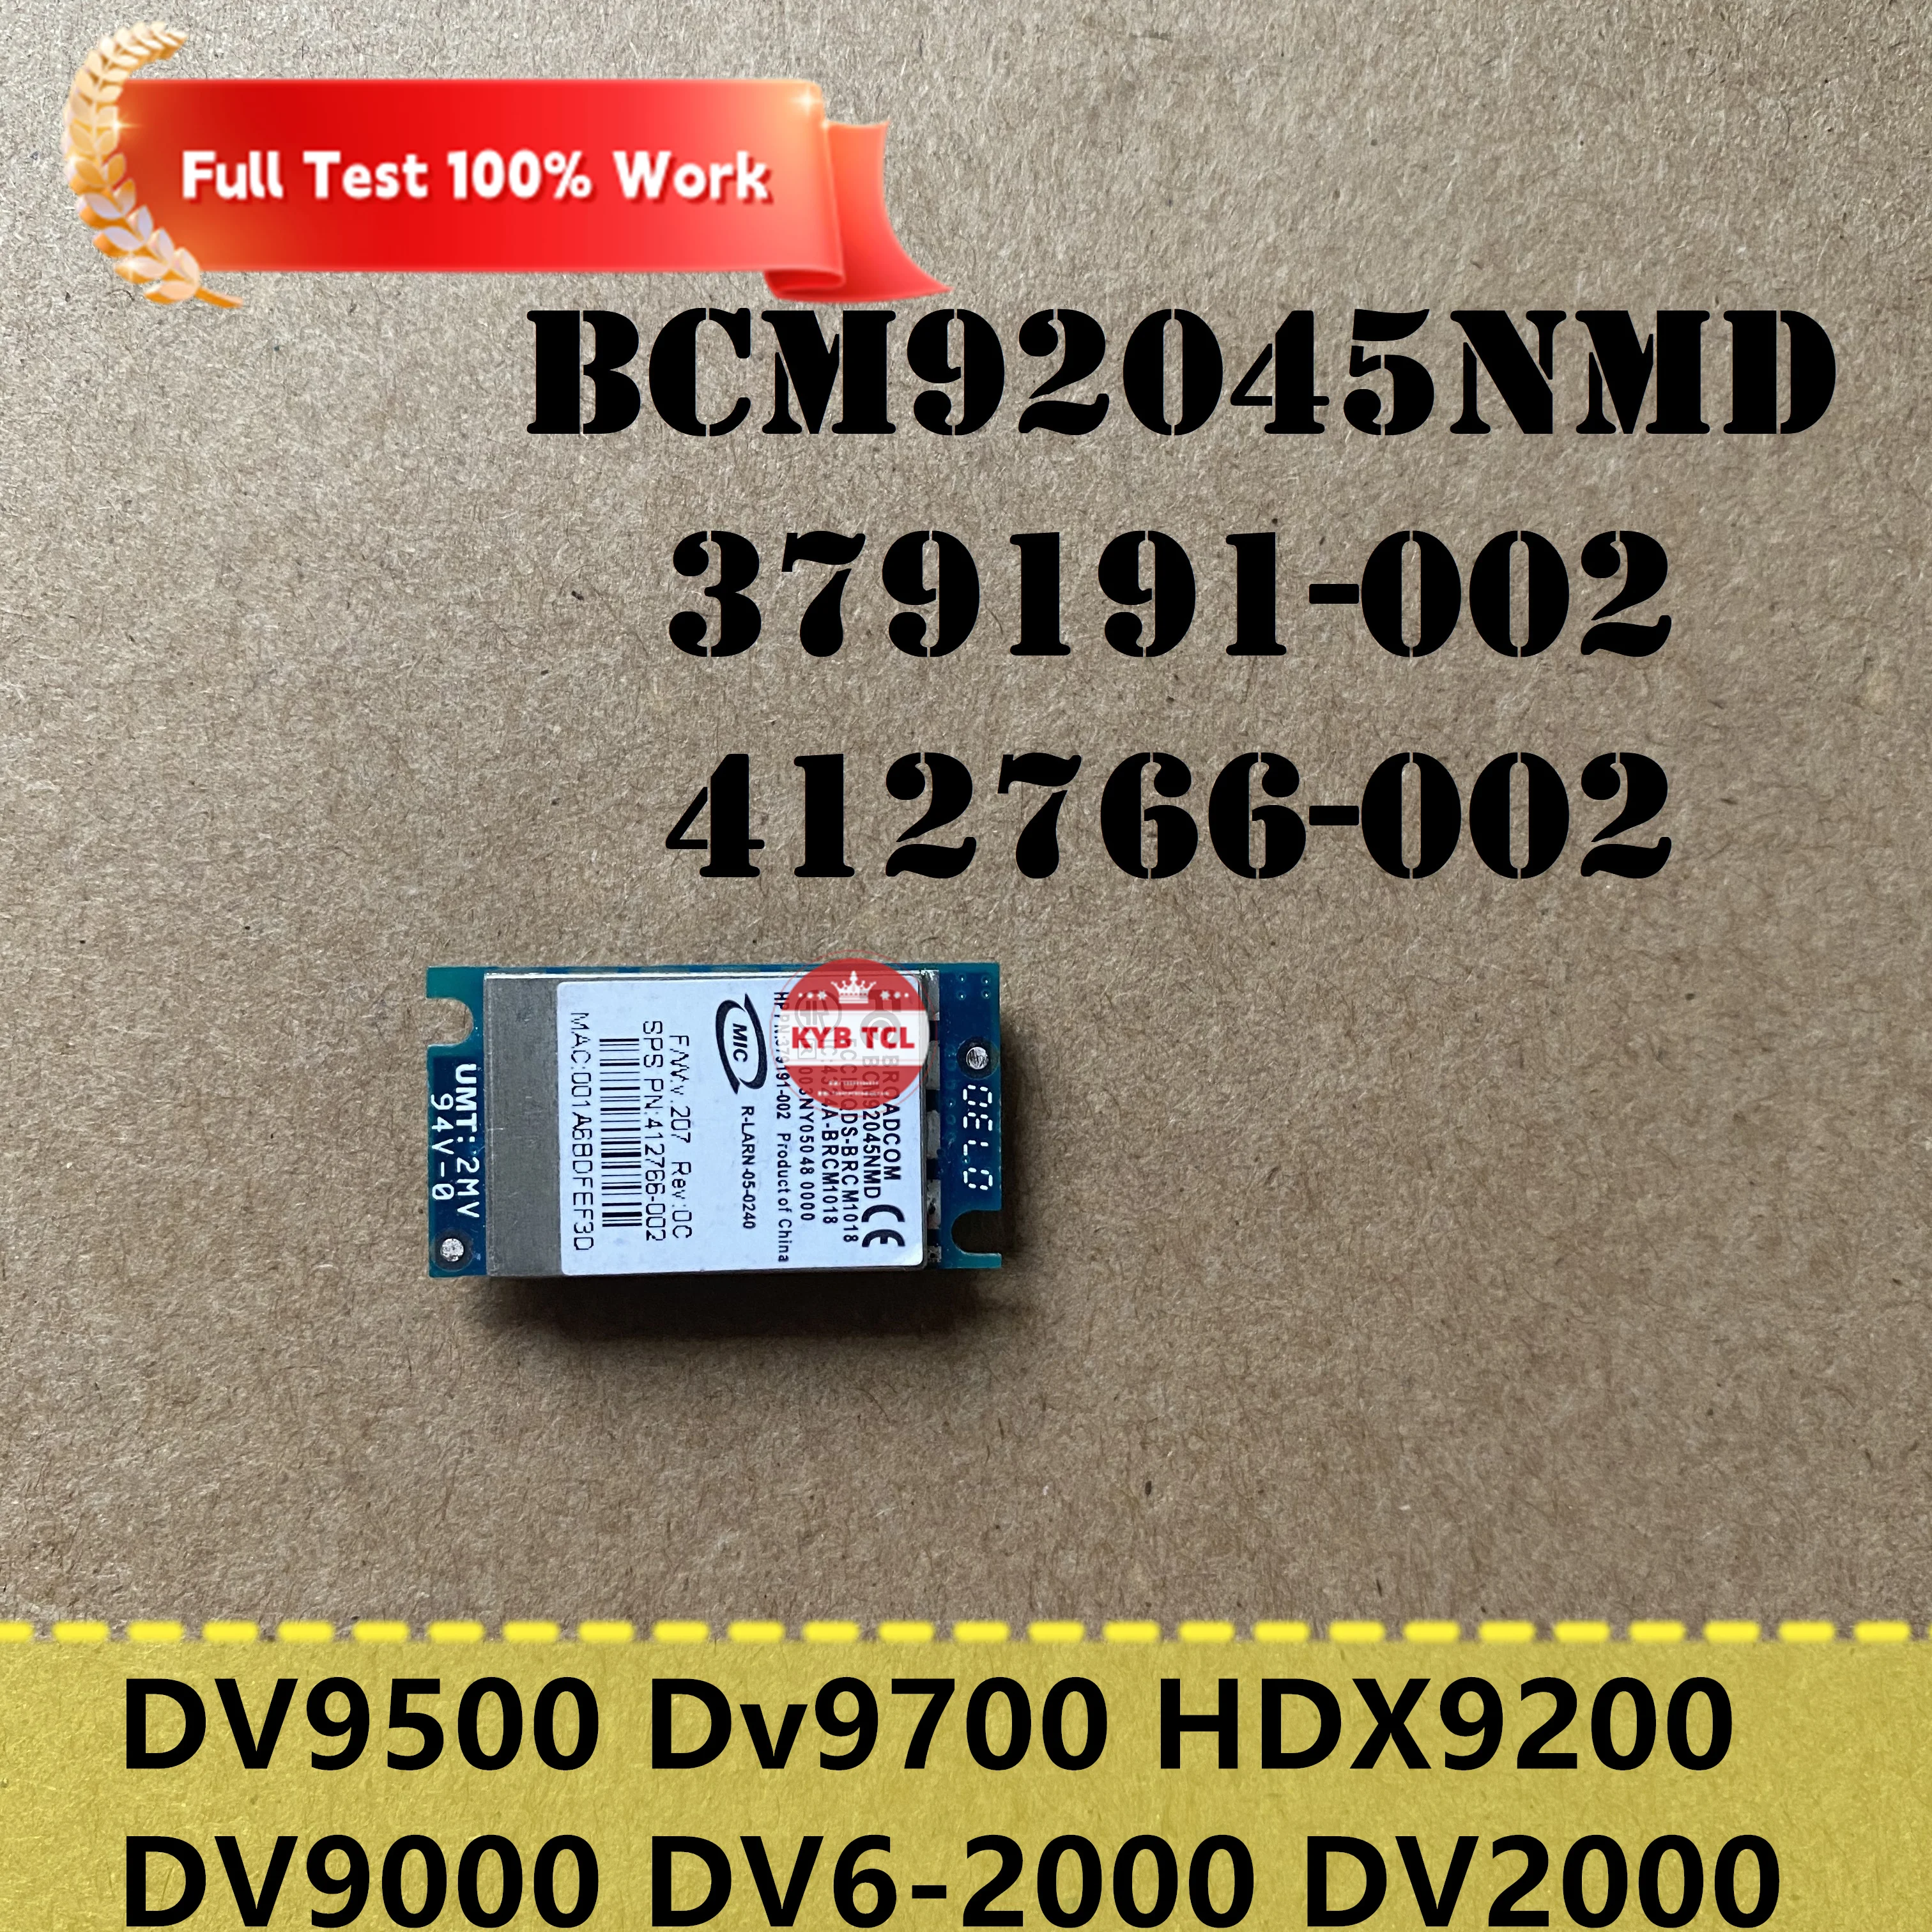 

For HP Pavilion DV9500 Dv9700 HDX9200 DV9000 DV6-2000 DV2000 Laptop Bluetooth Module Board BCM92045NMD 412766-002 379191-001